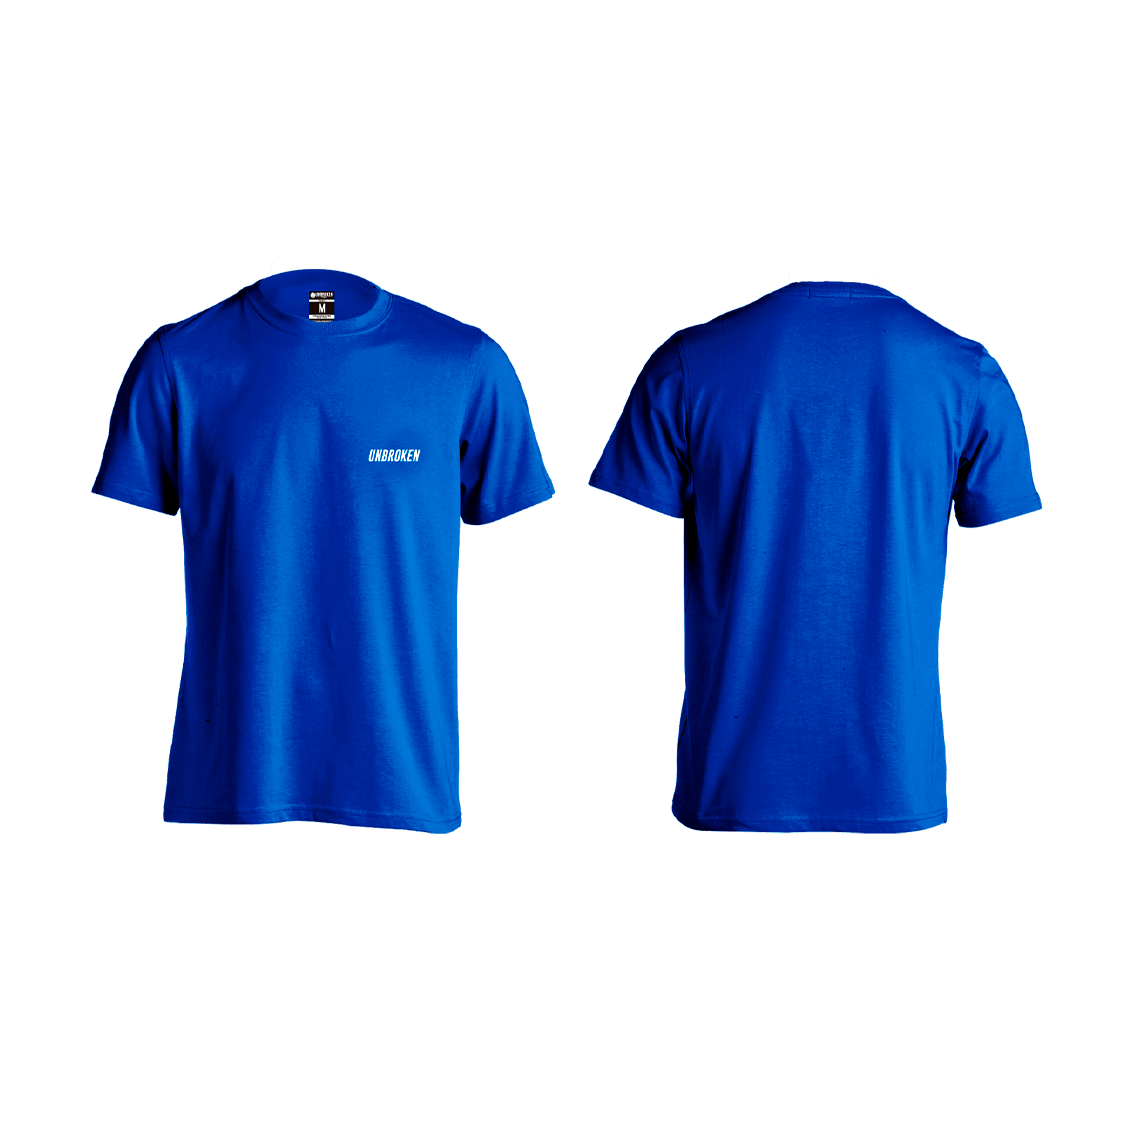 Camiseta Unbroken basic blue - Unbroken Sports Wear 